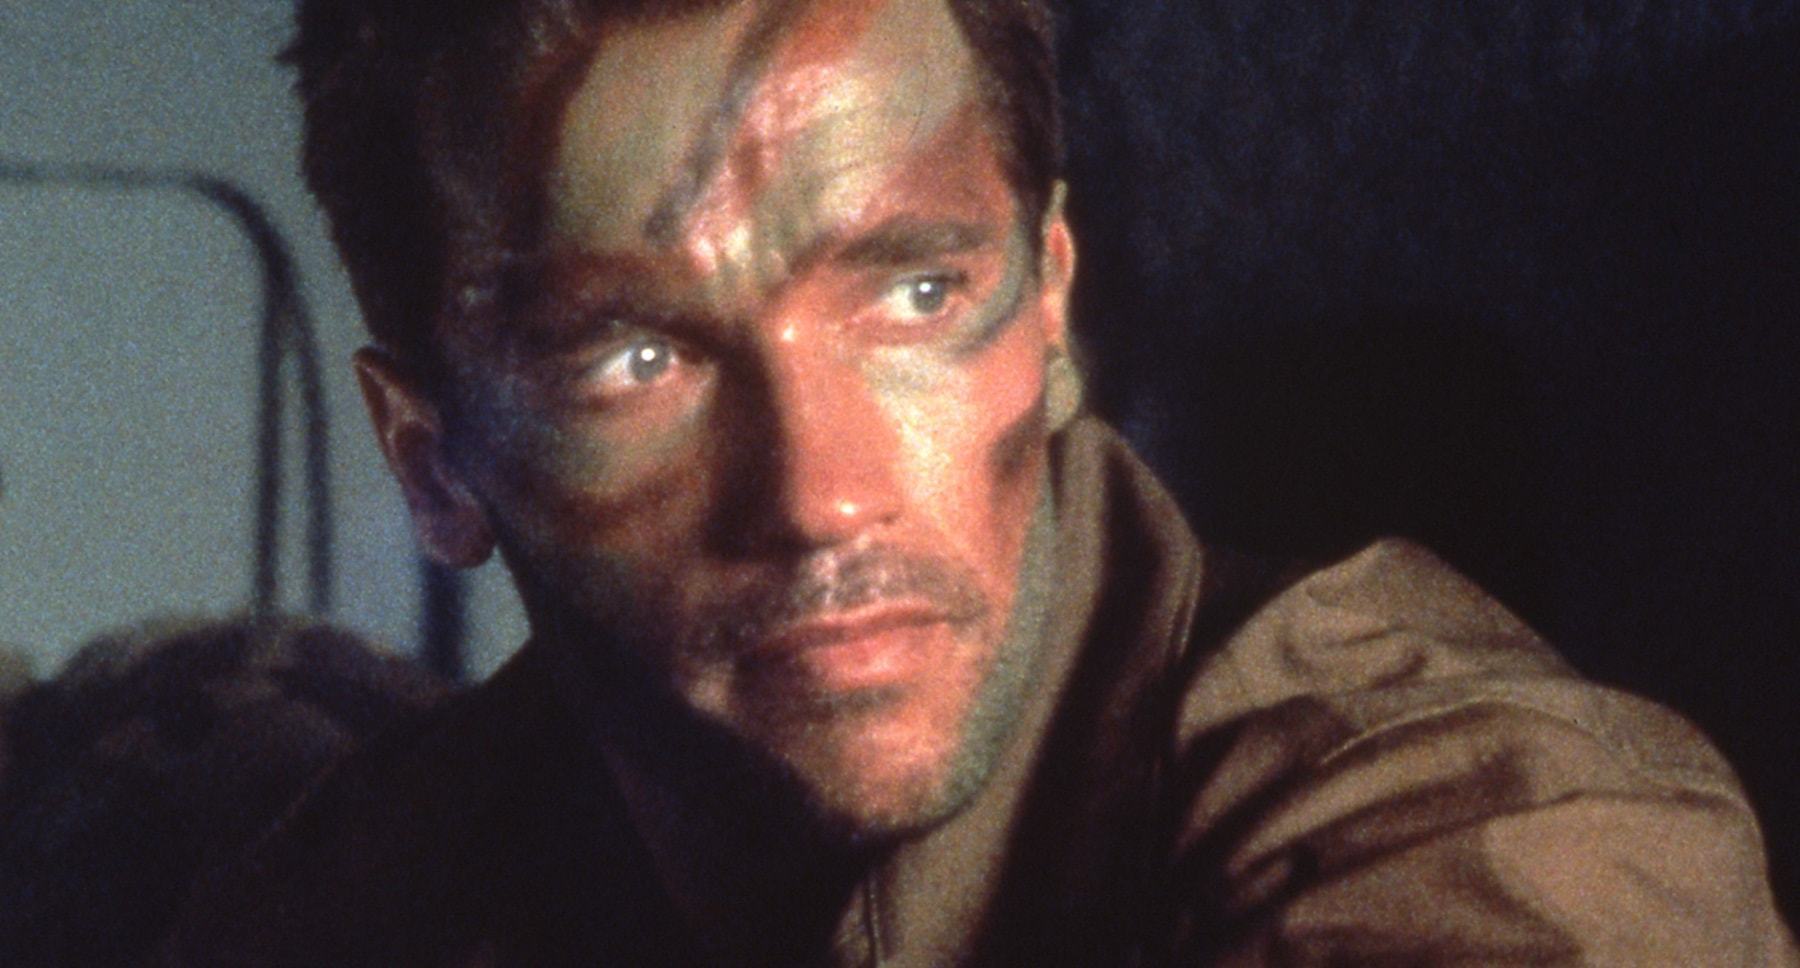 Arnold Schwarzenegger (as Dutch) in the movie "Predator"